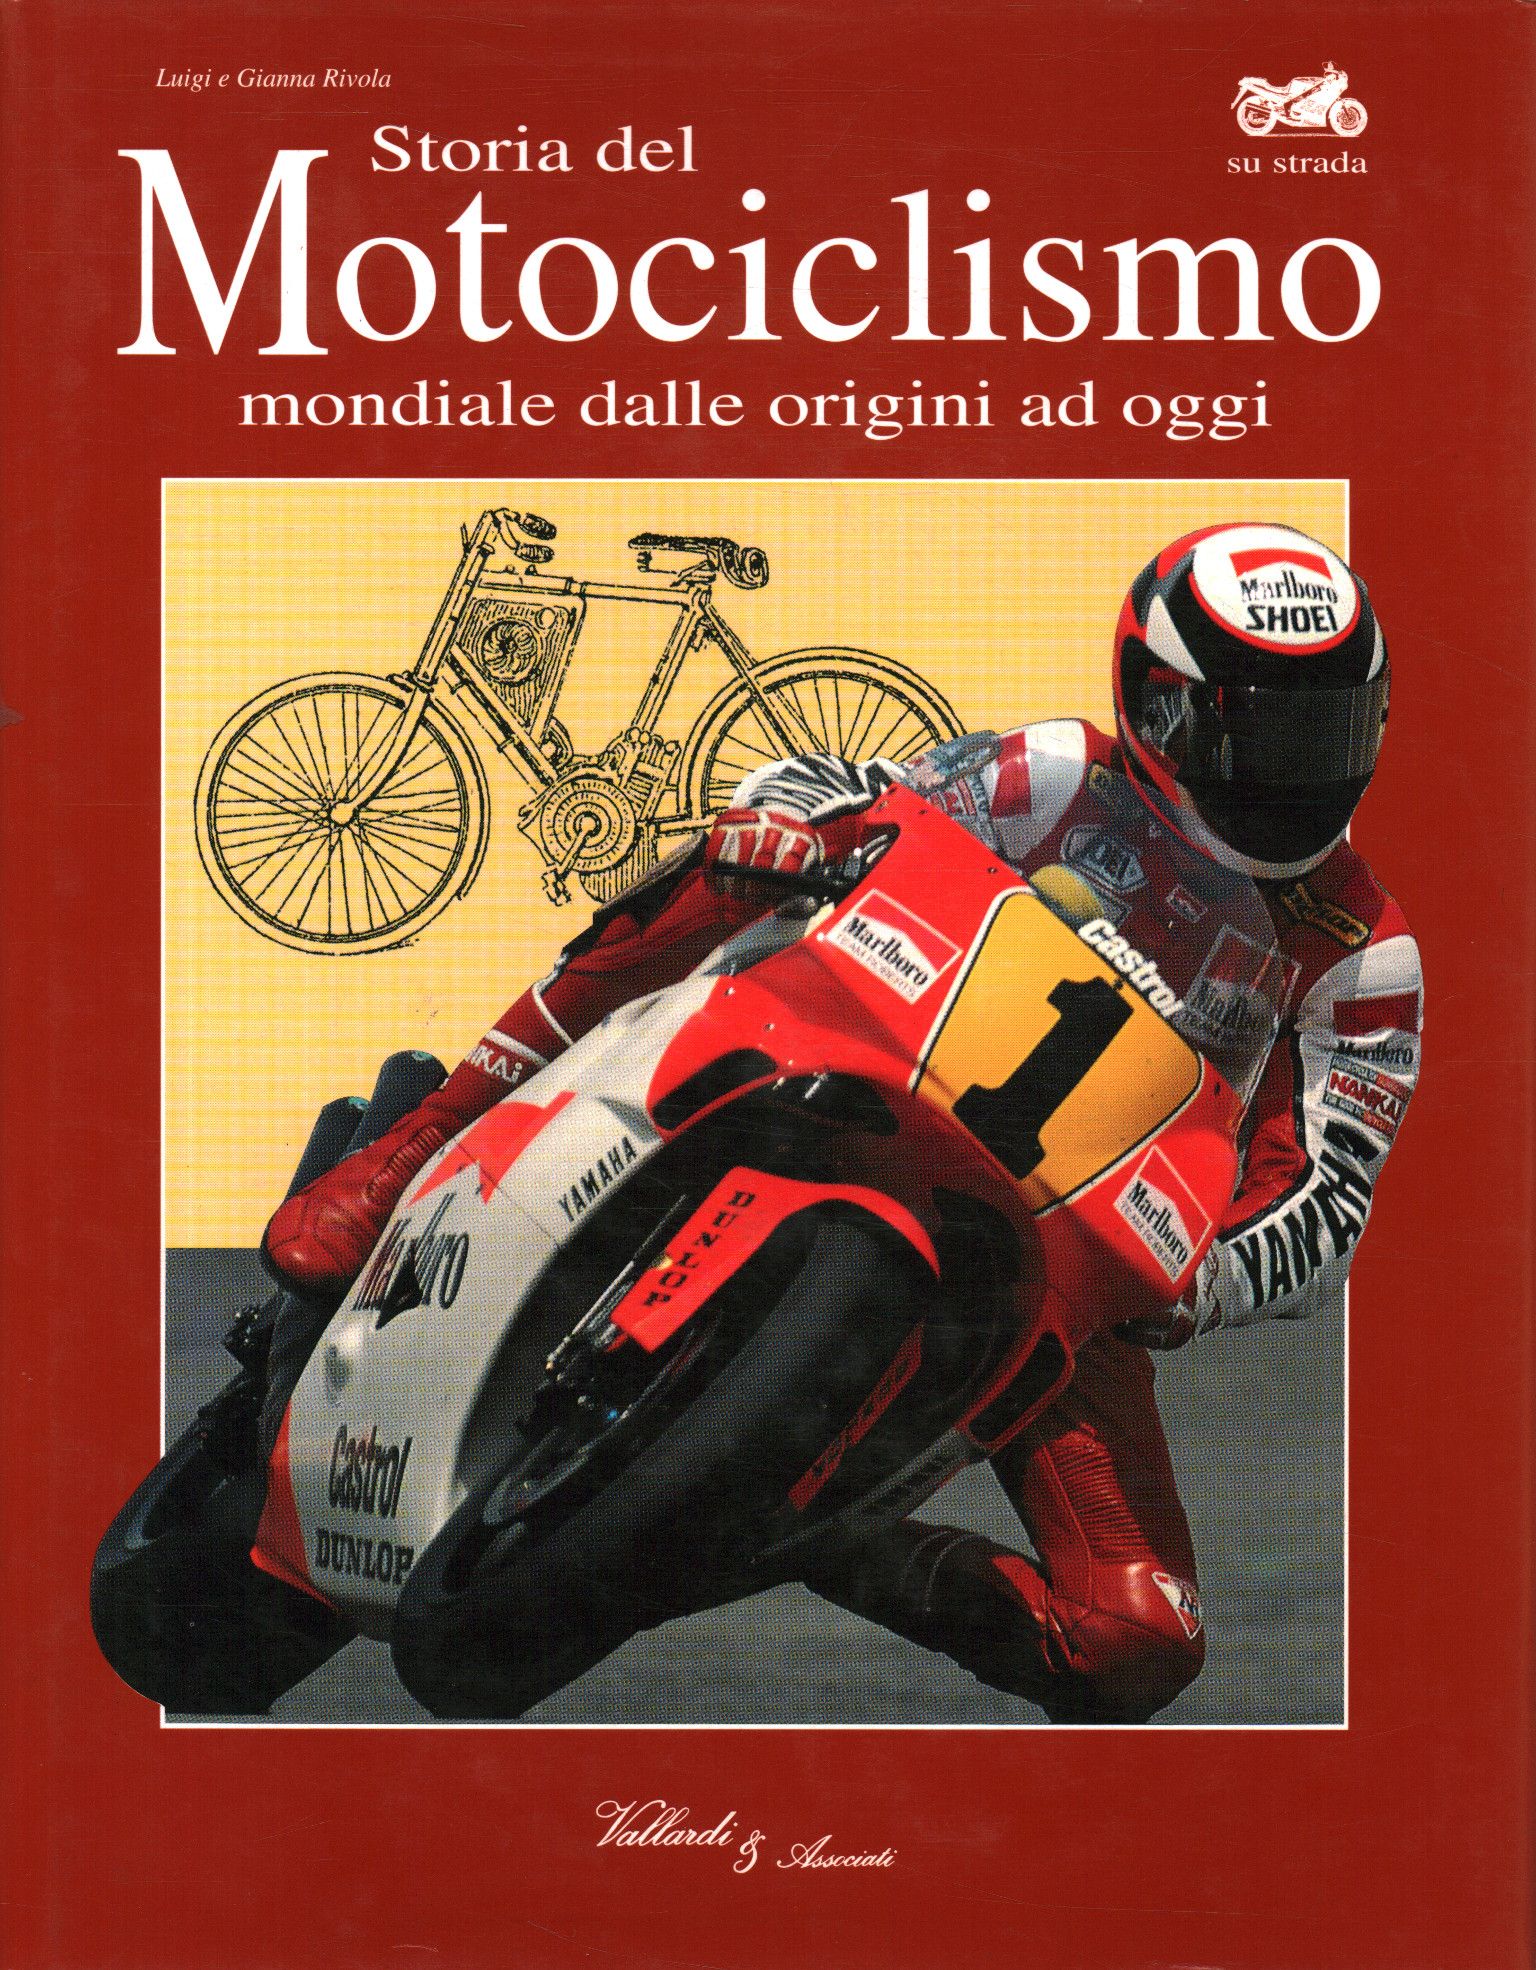 Histoire de la moto (monde) de% 2, Histoire de la moto (monde) de% 2